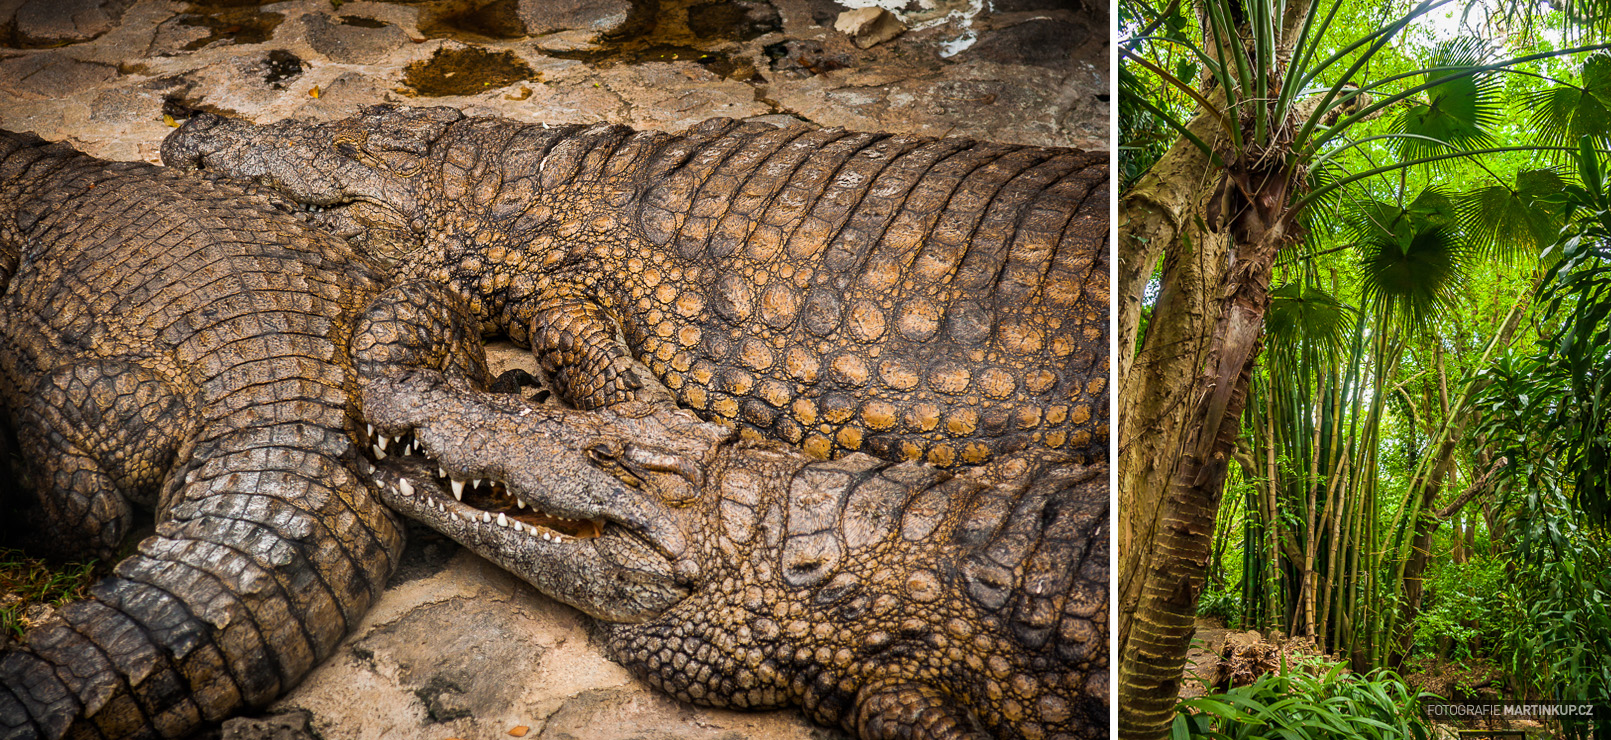 Farma krokodýlů v La Vanille Parku (Mauritius)